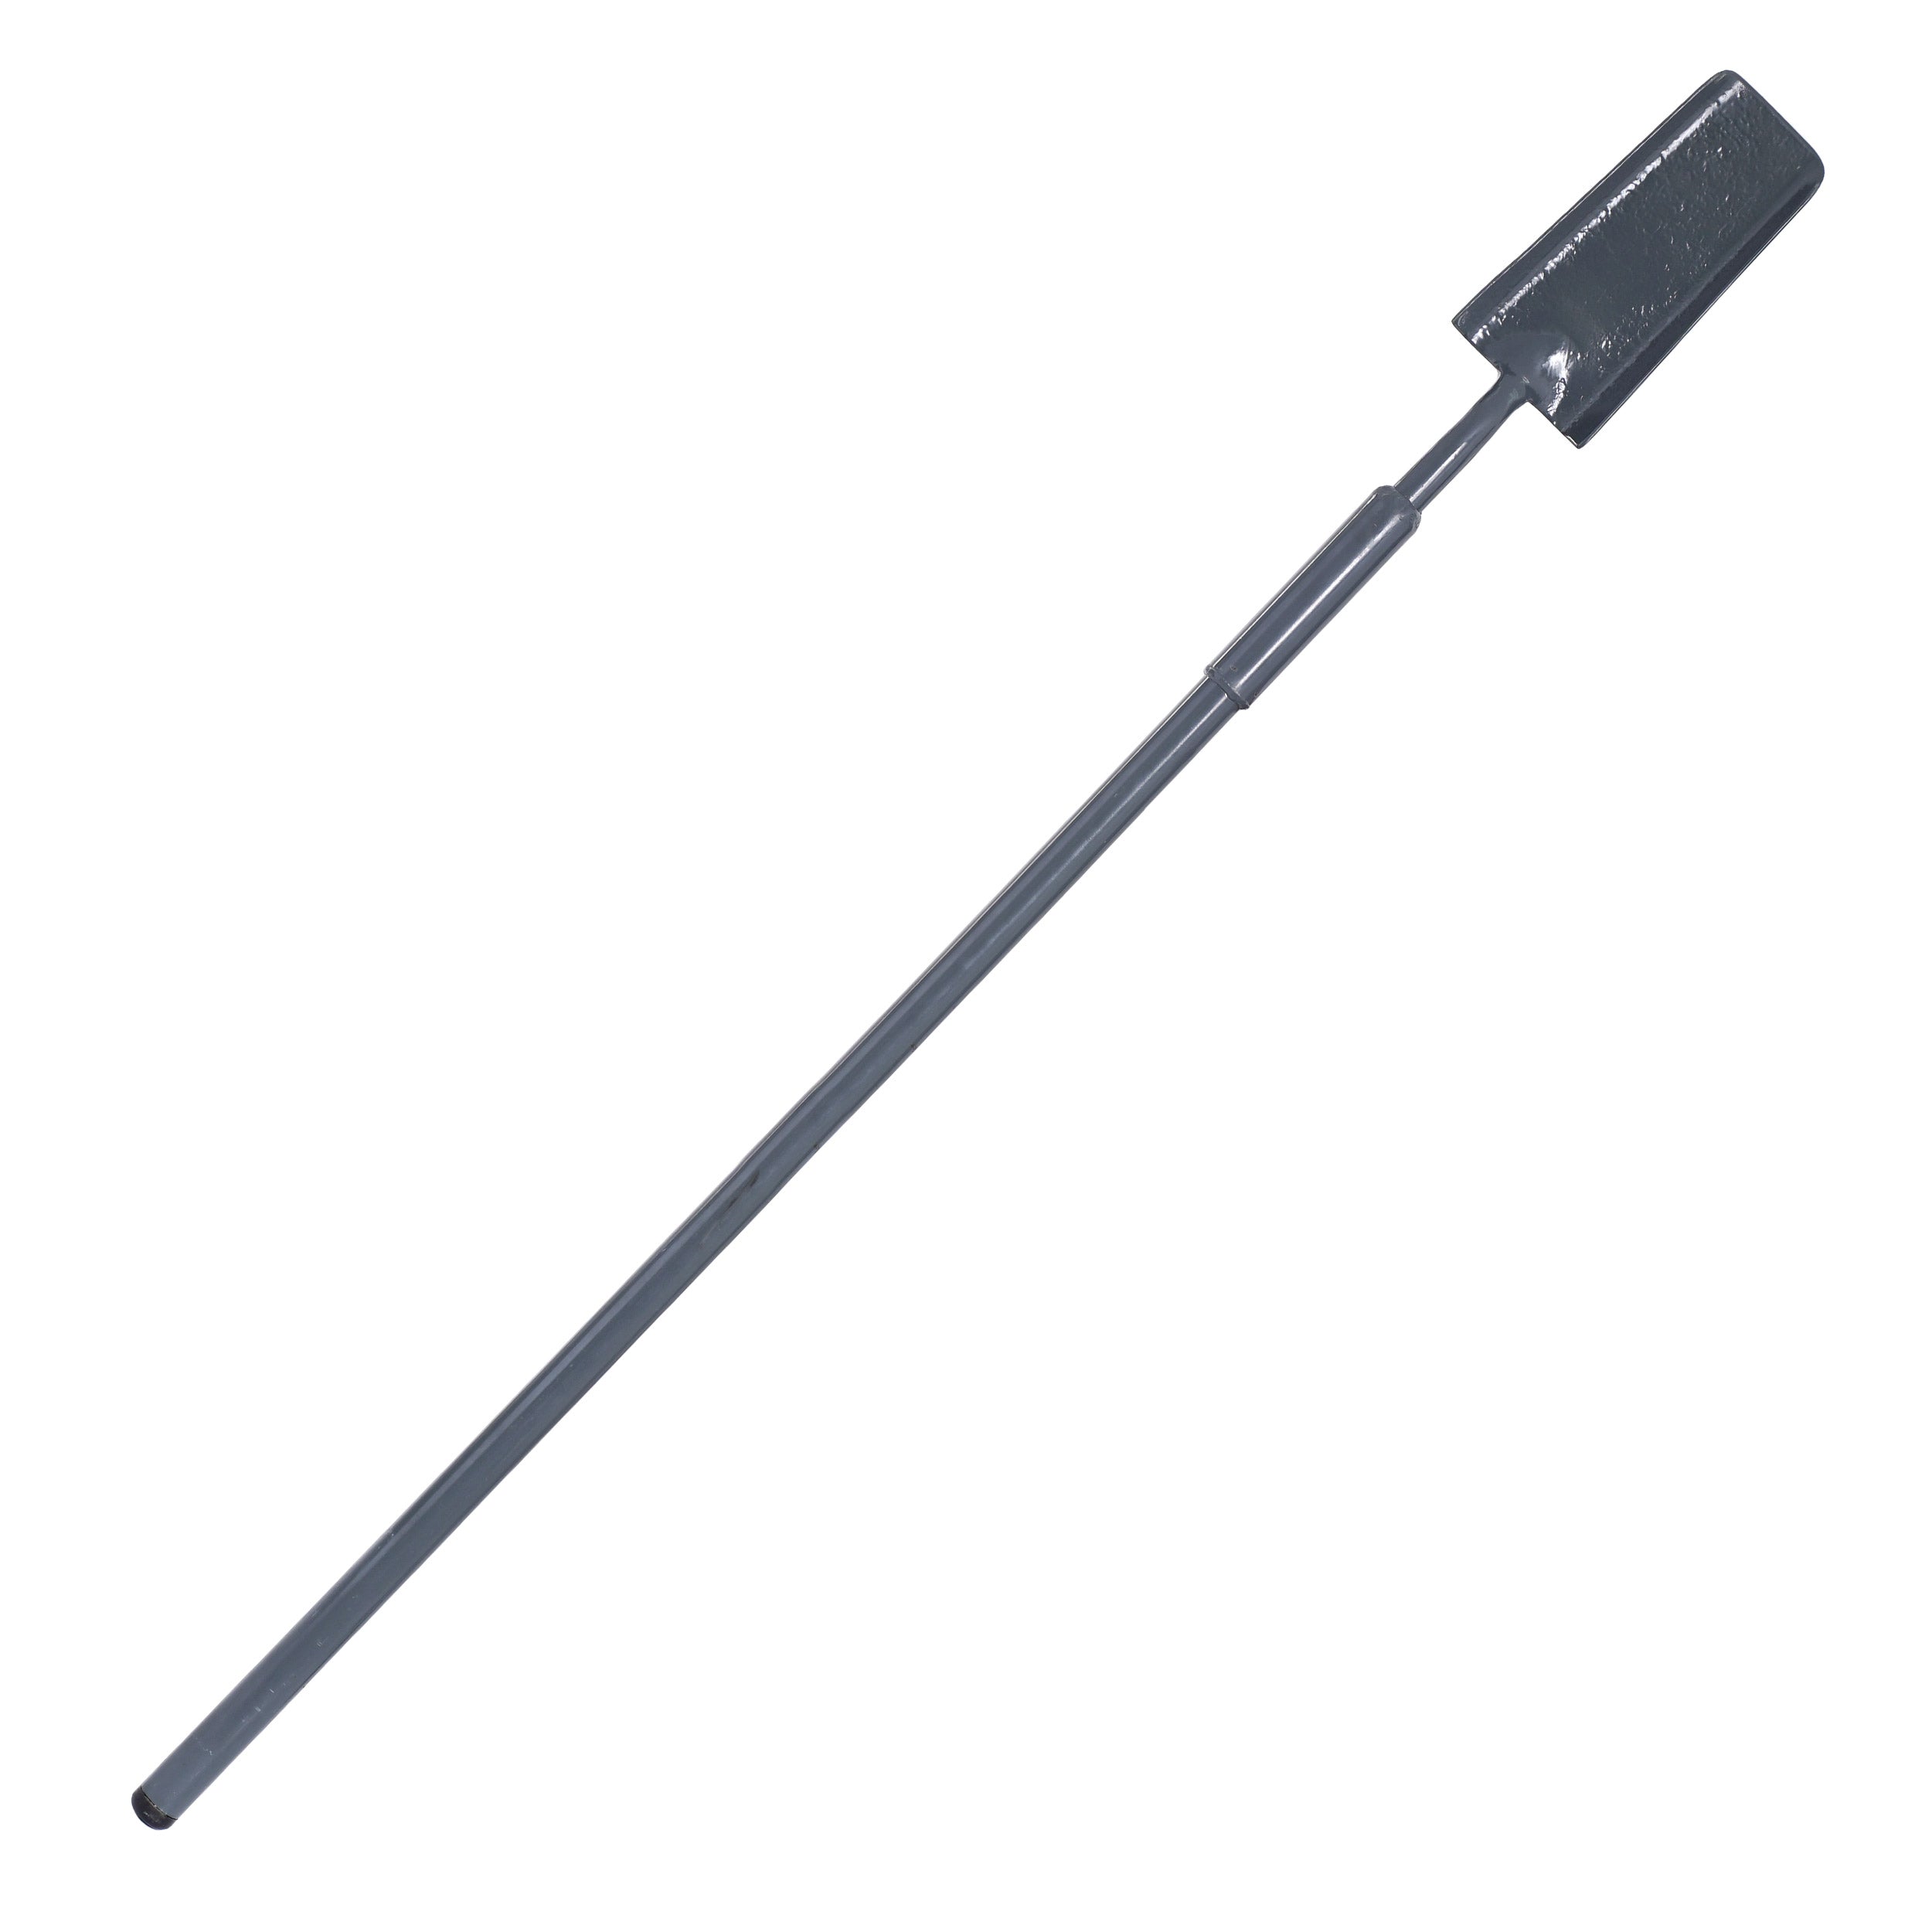 Full length image of Pro Post Hole Shovel